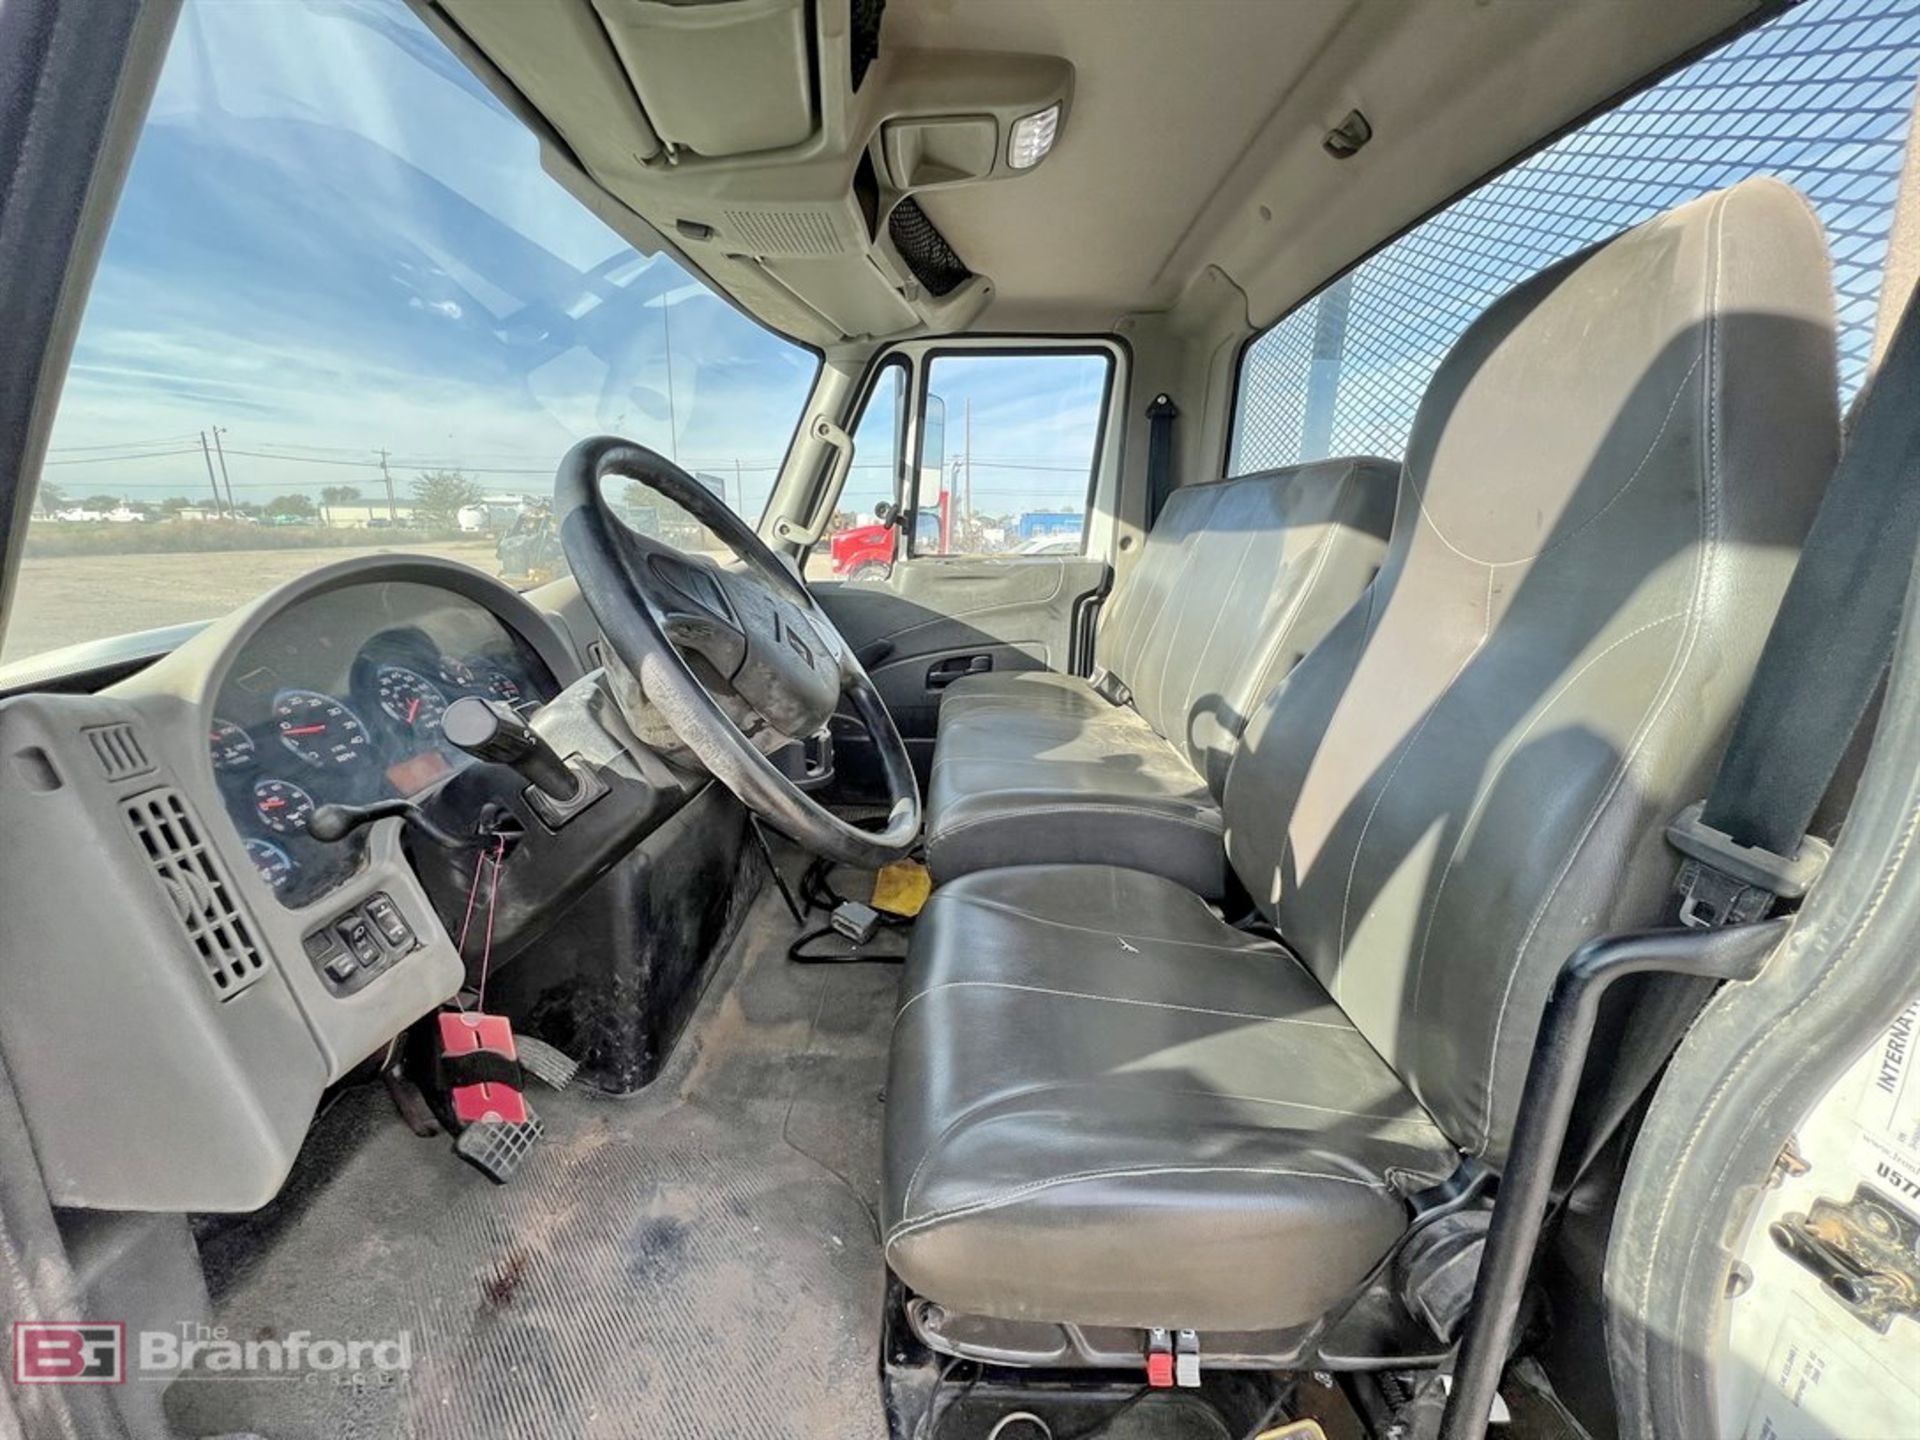 2019 International 4300 durastar 4x2 mechanics truck - Image 9 of 17